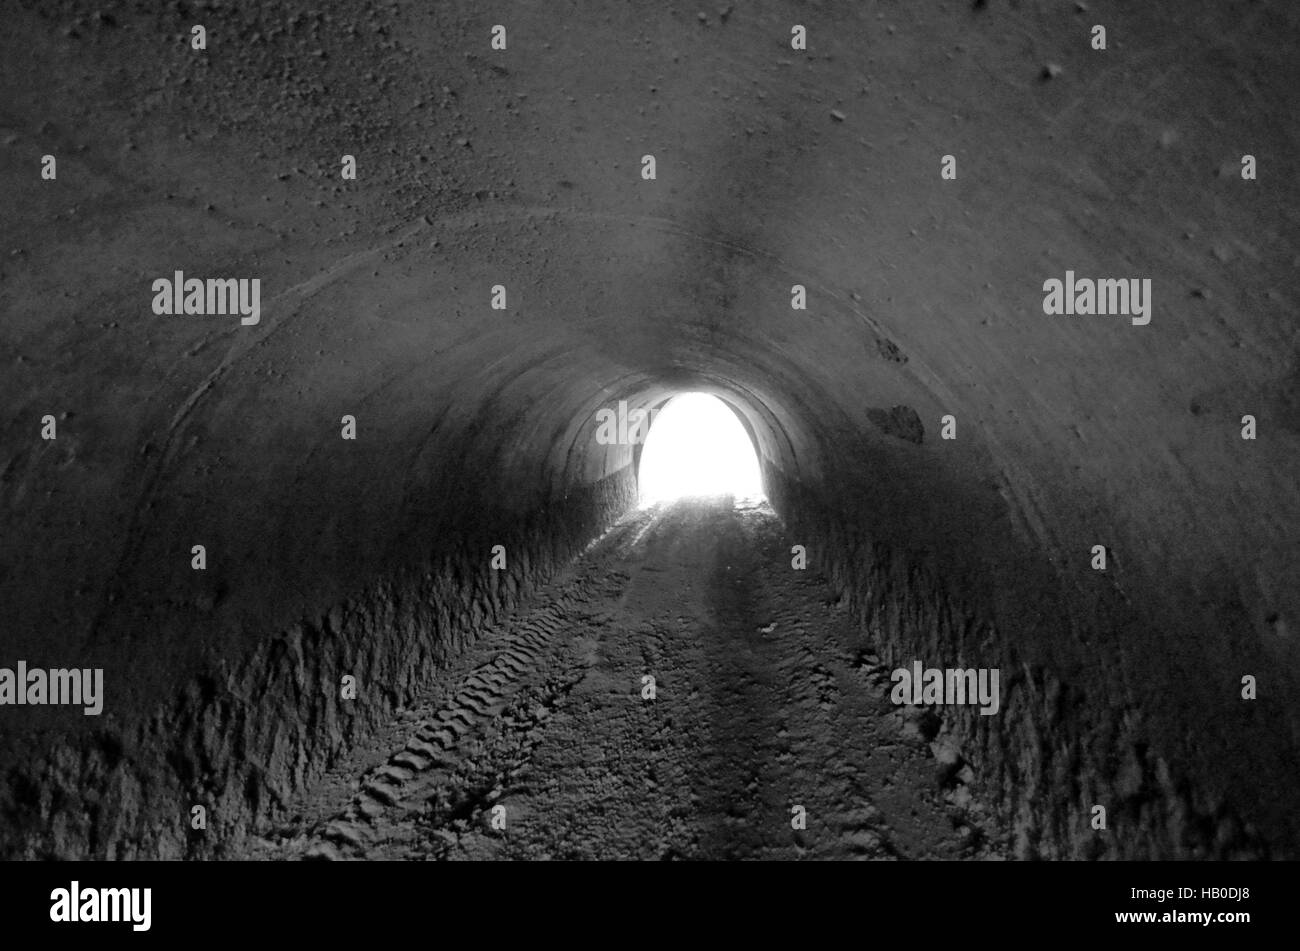 Urban exploration inside a tunnel Stock Photo